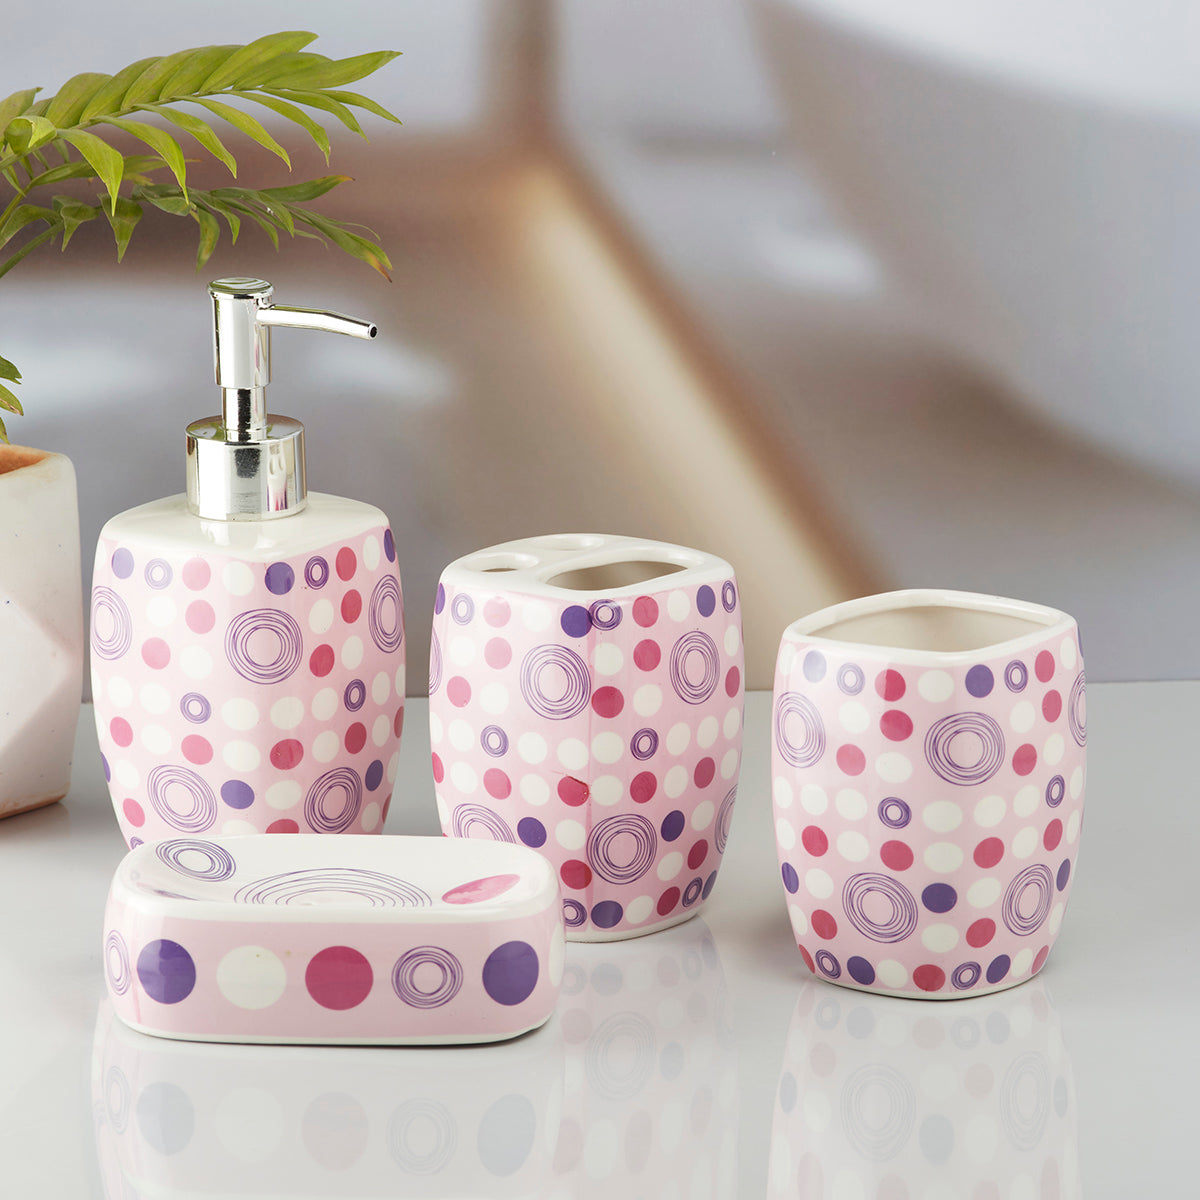 Ceramic Bathroom Accessories Set of 4 Bath Set with Soap Dispenser (10216)